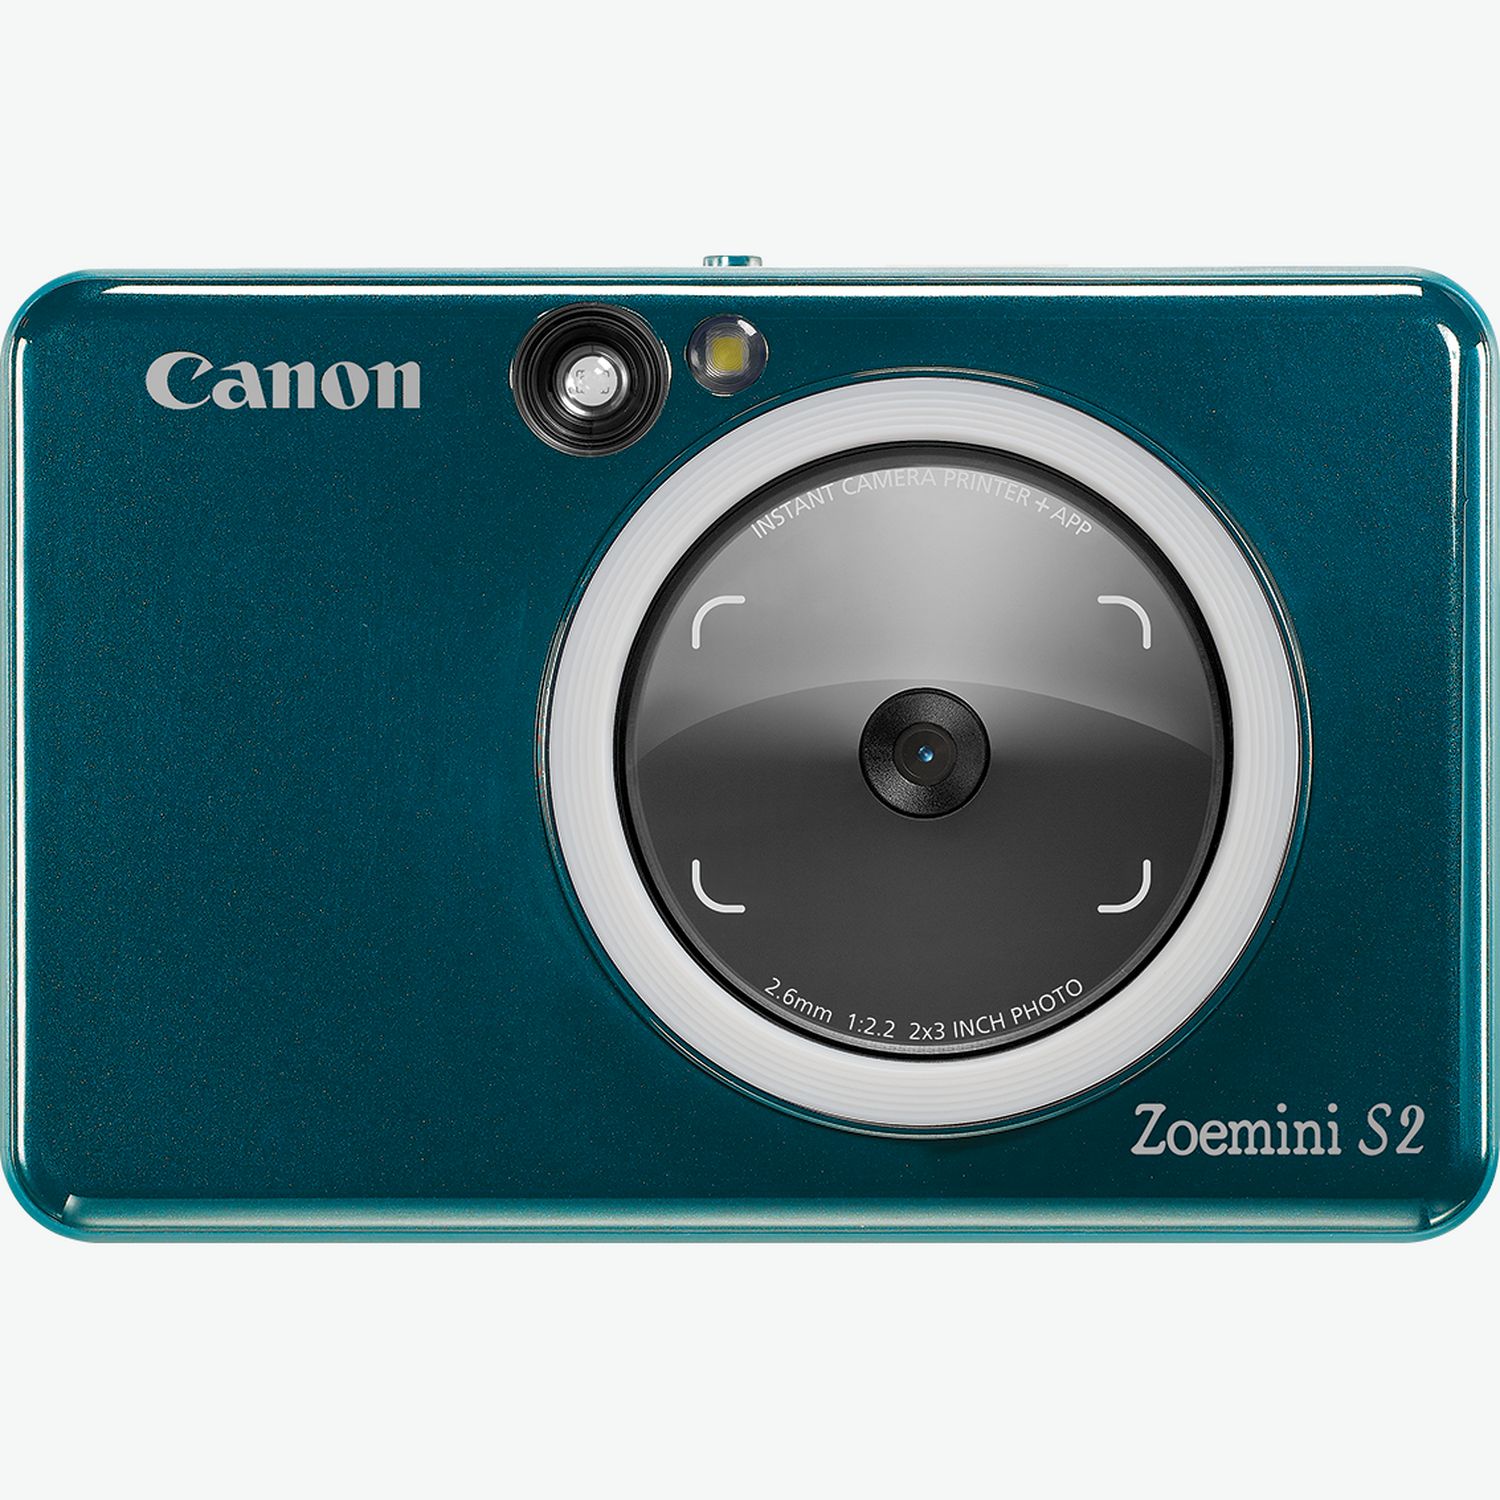 Imprimante photo portable Canon Zoemini, rose doré dans Fin de